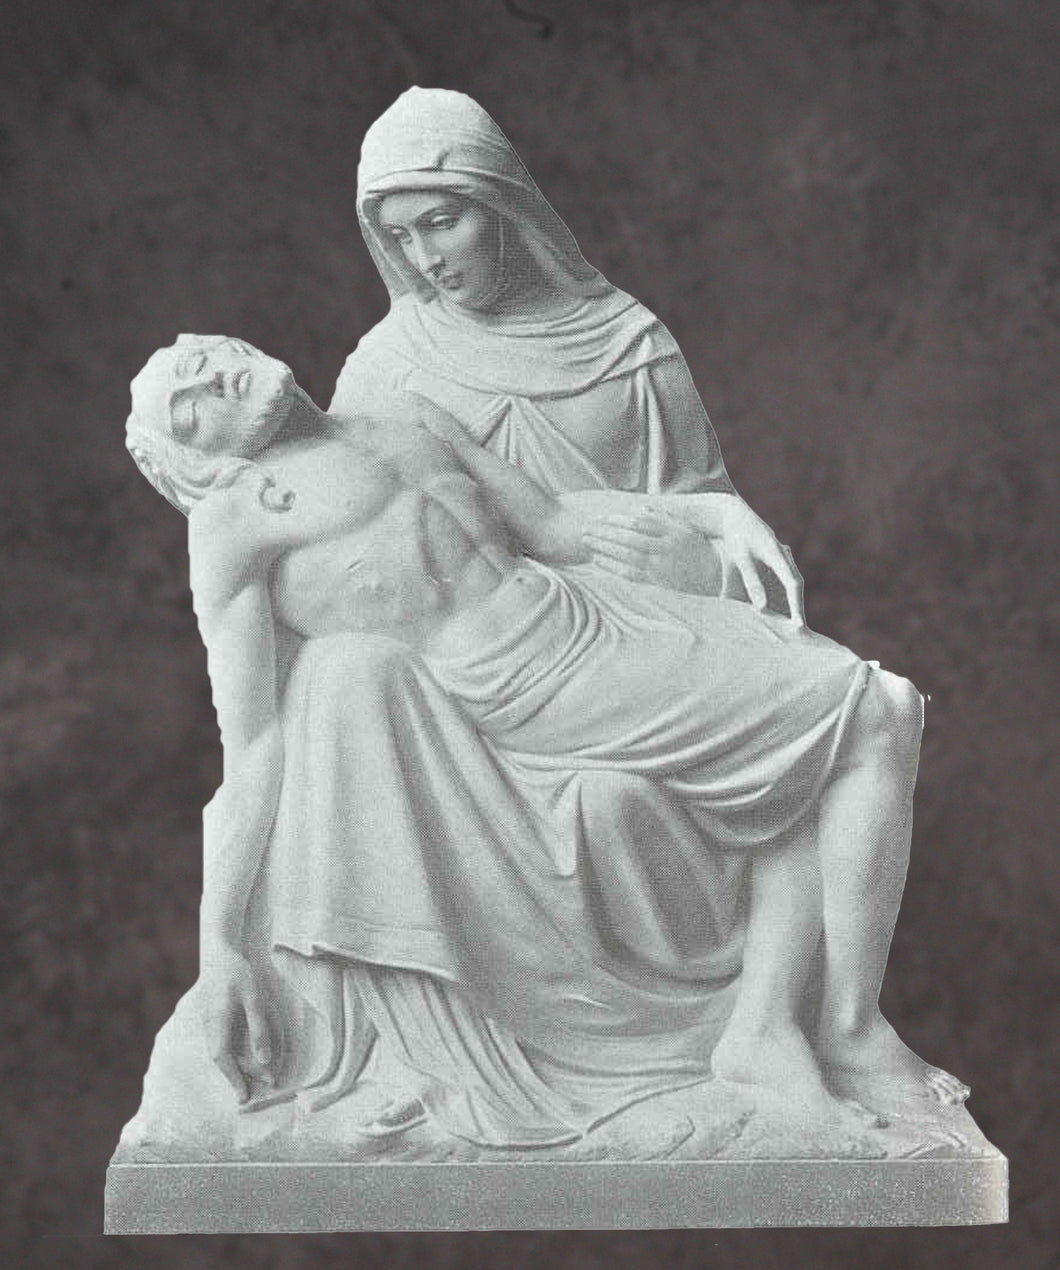 Pieta Statue by De De Prato in Solid Marble - 36”H